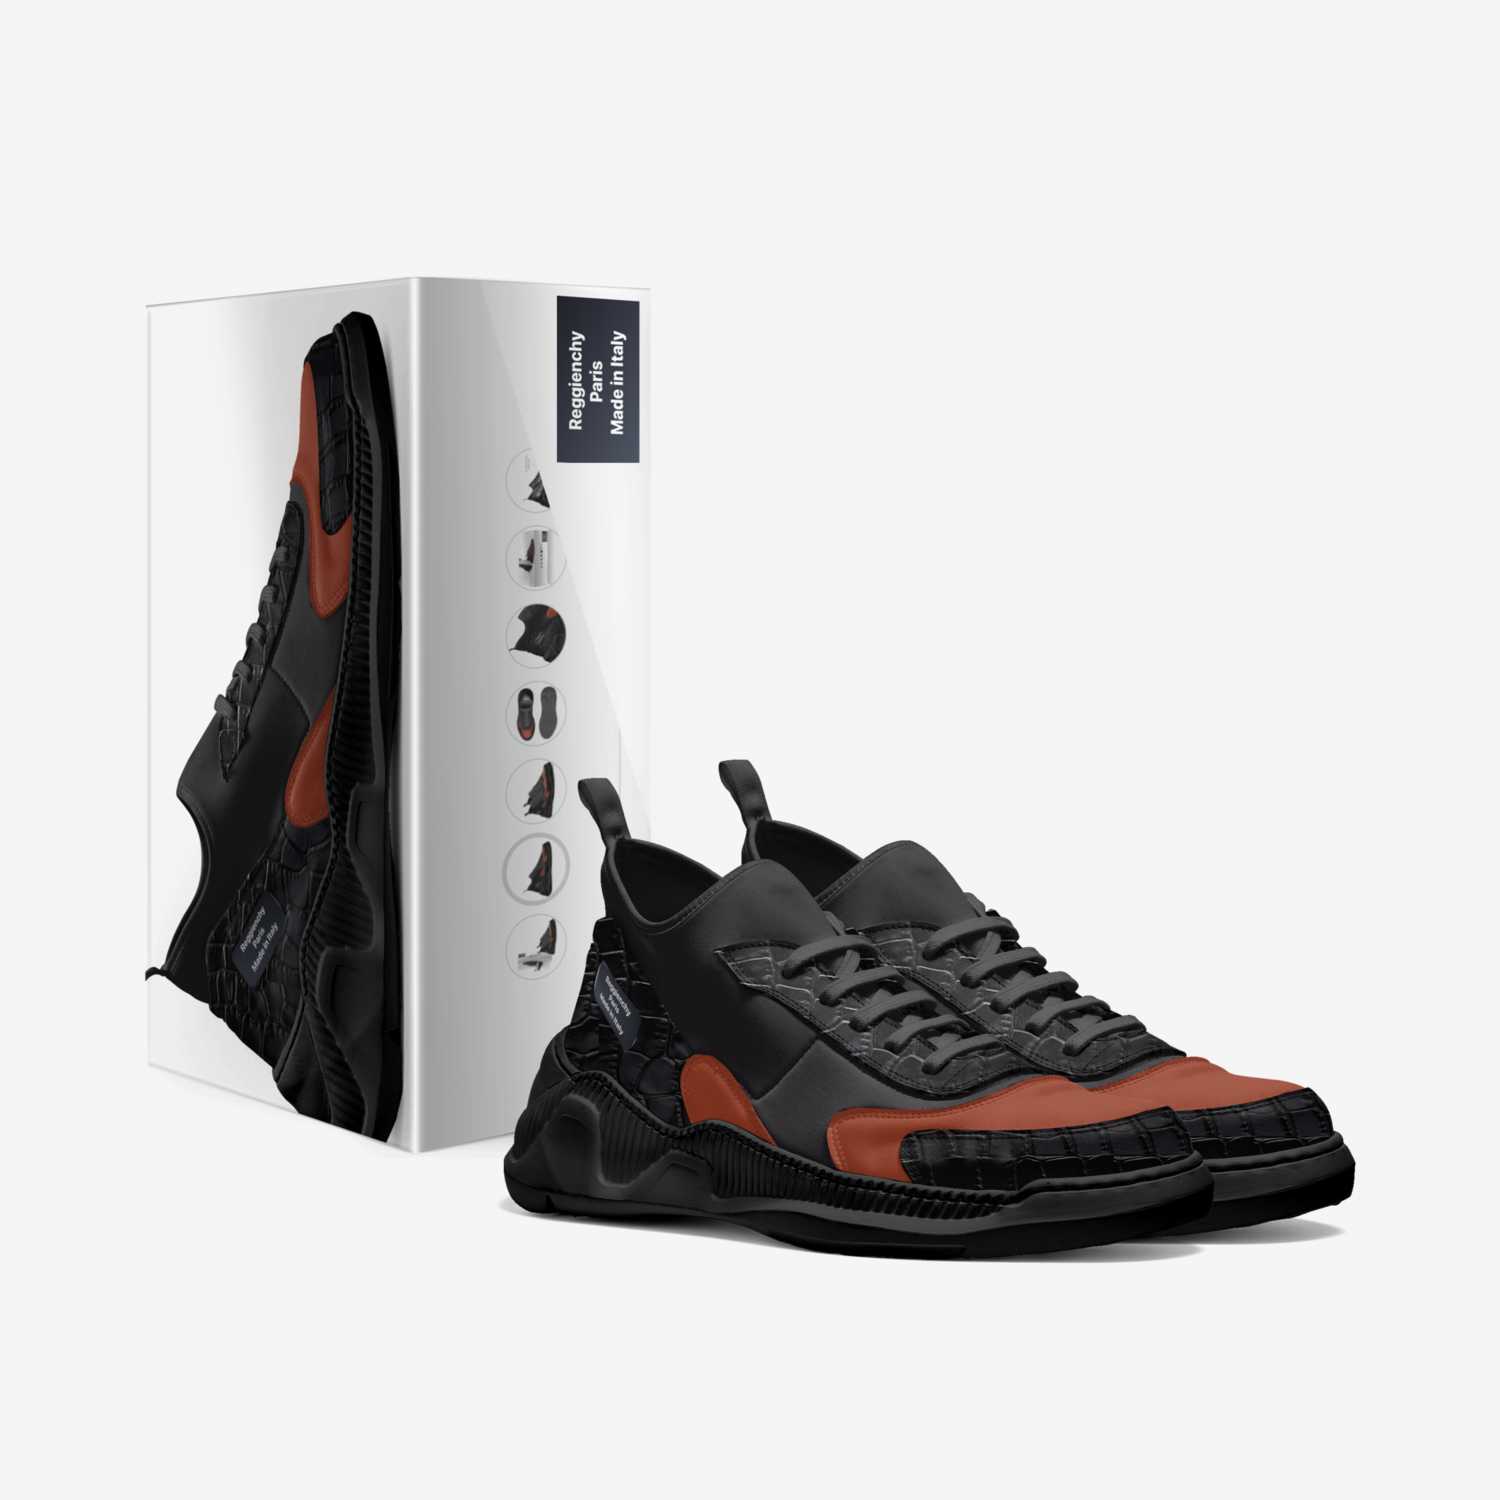 Reggienchy  custom made in Italy shoes by Reggienchy La Jolla Fashion Designer | Box view